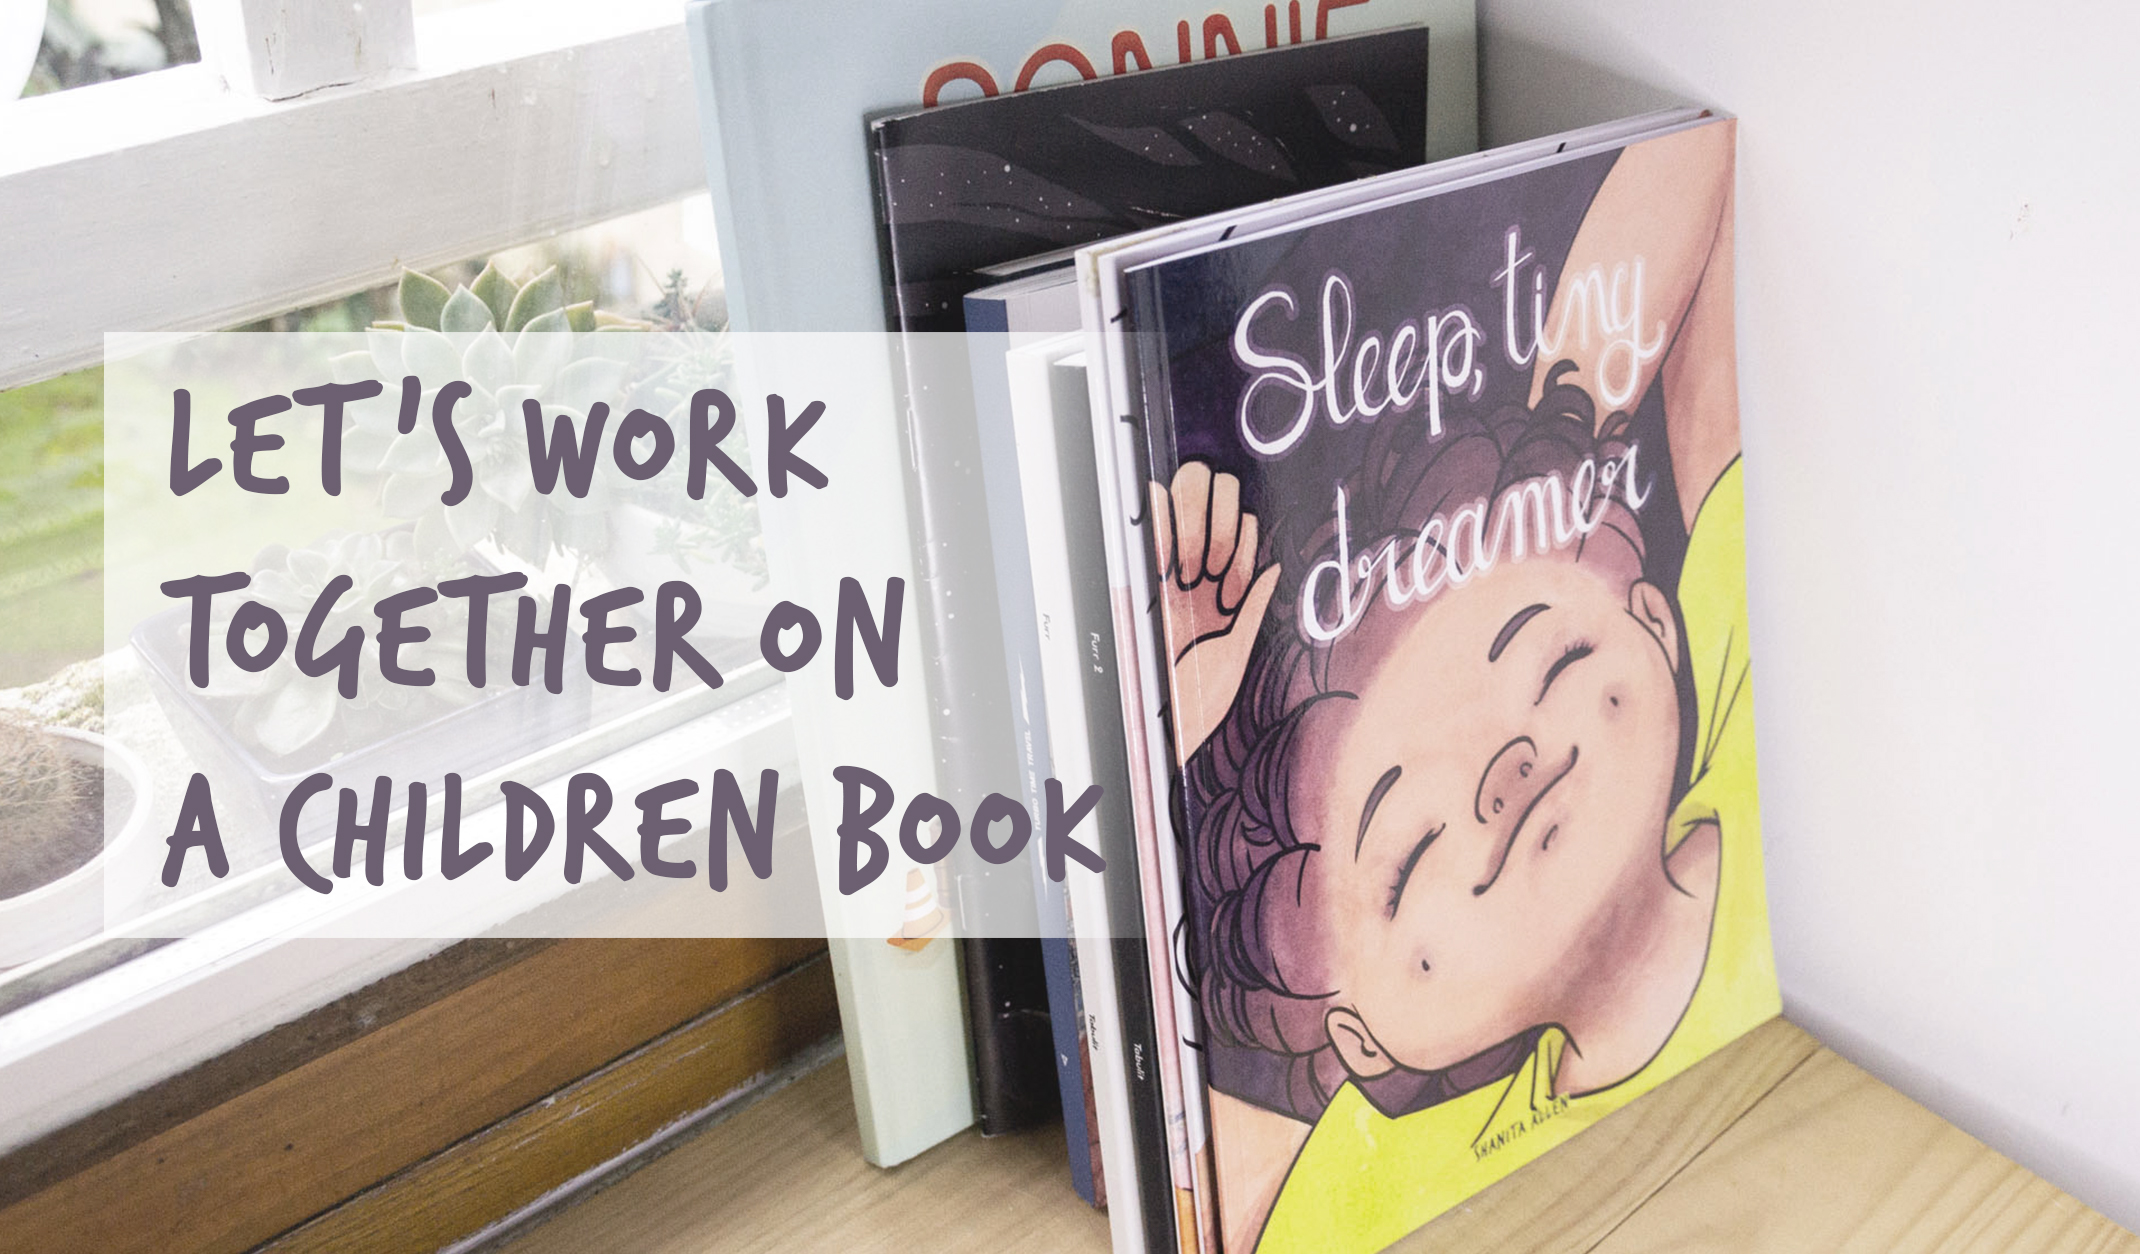 Let’s work together on a children book